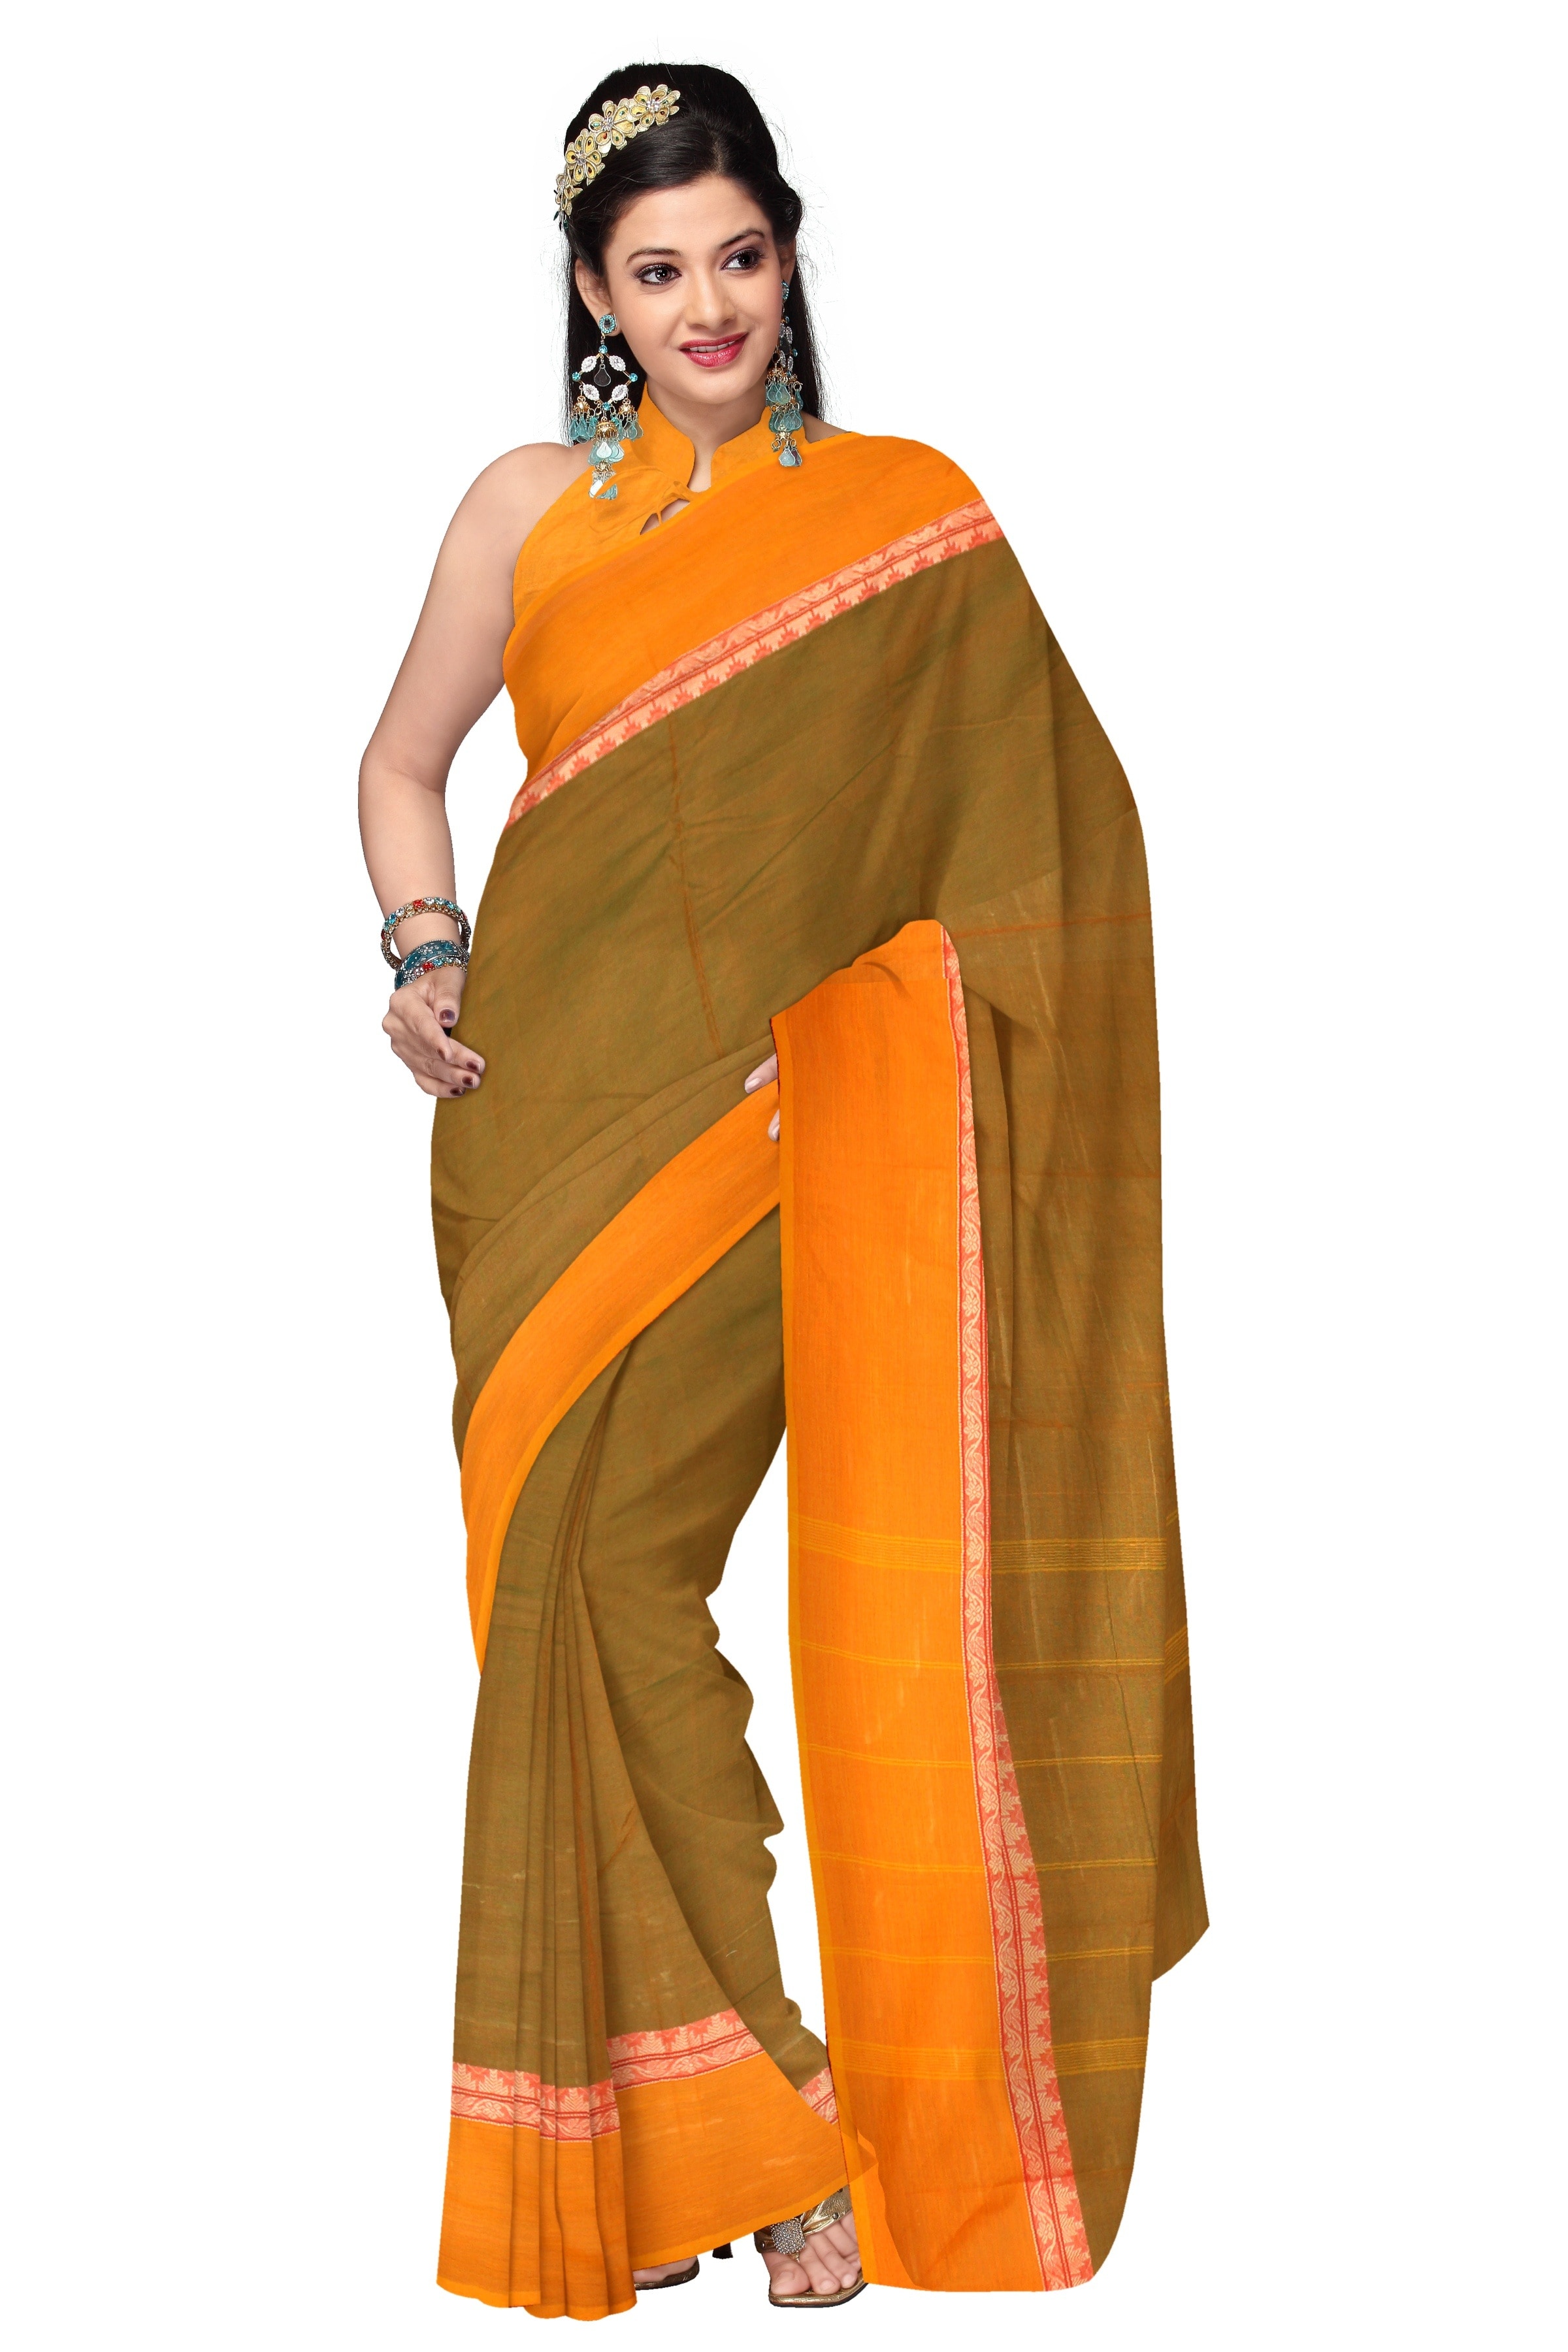 woman's orange and brown salwar kameez